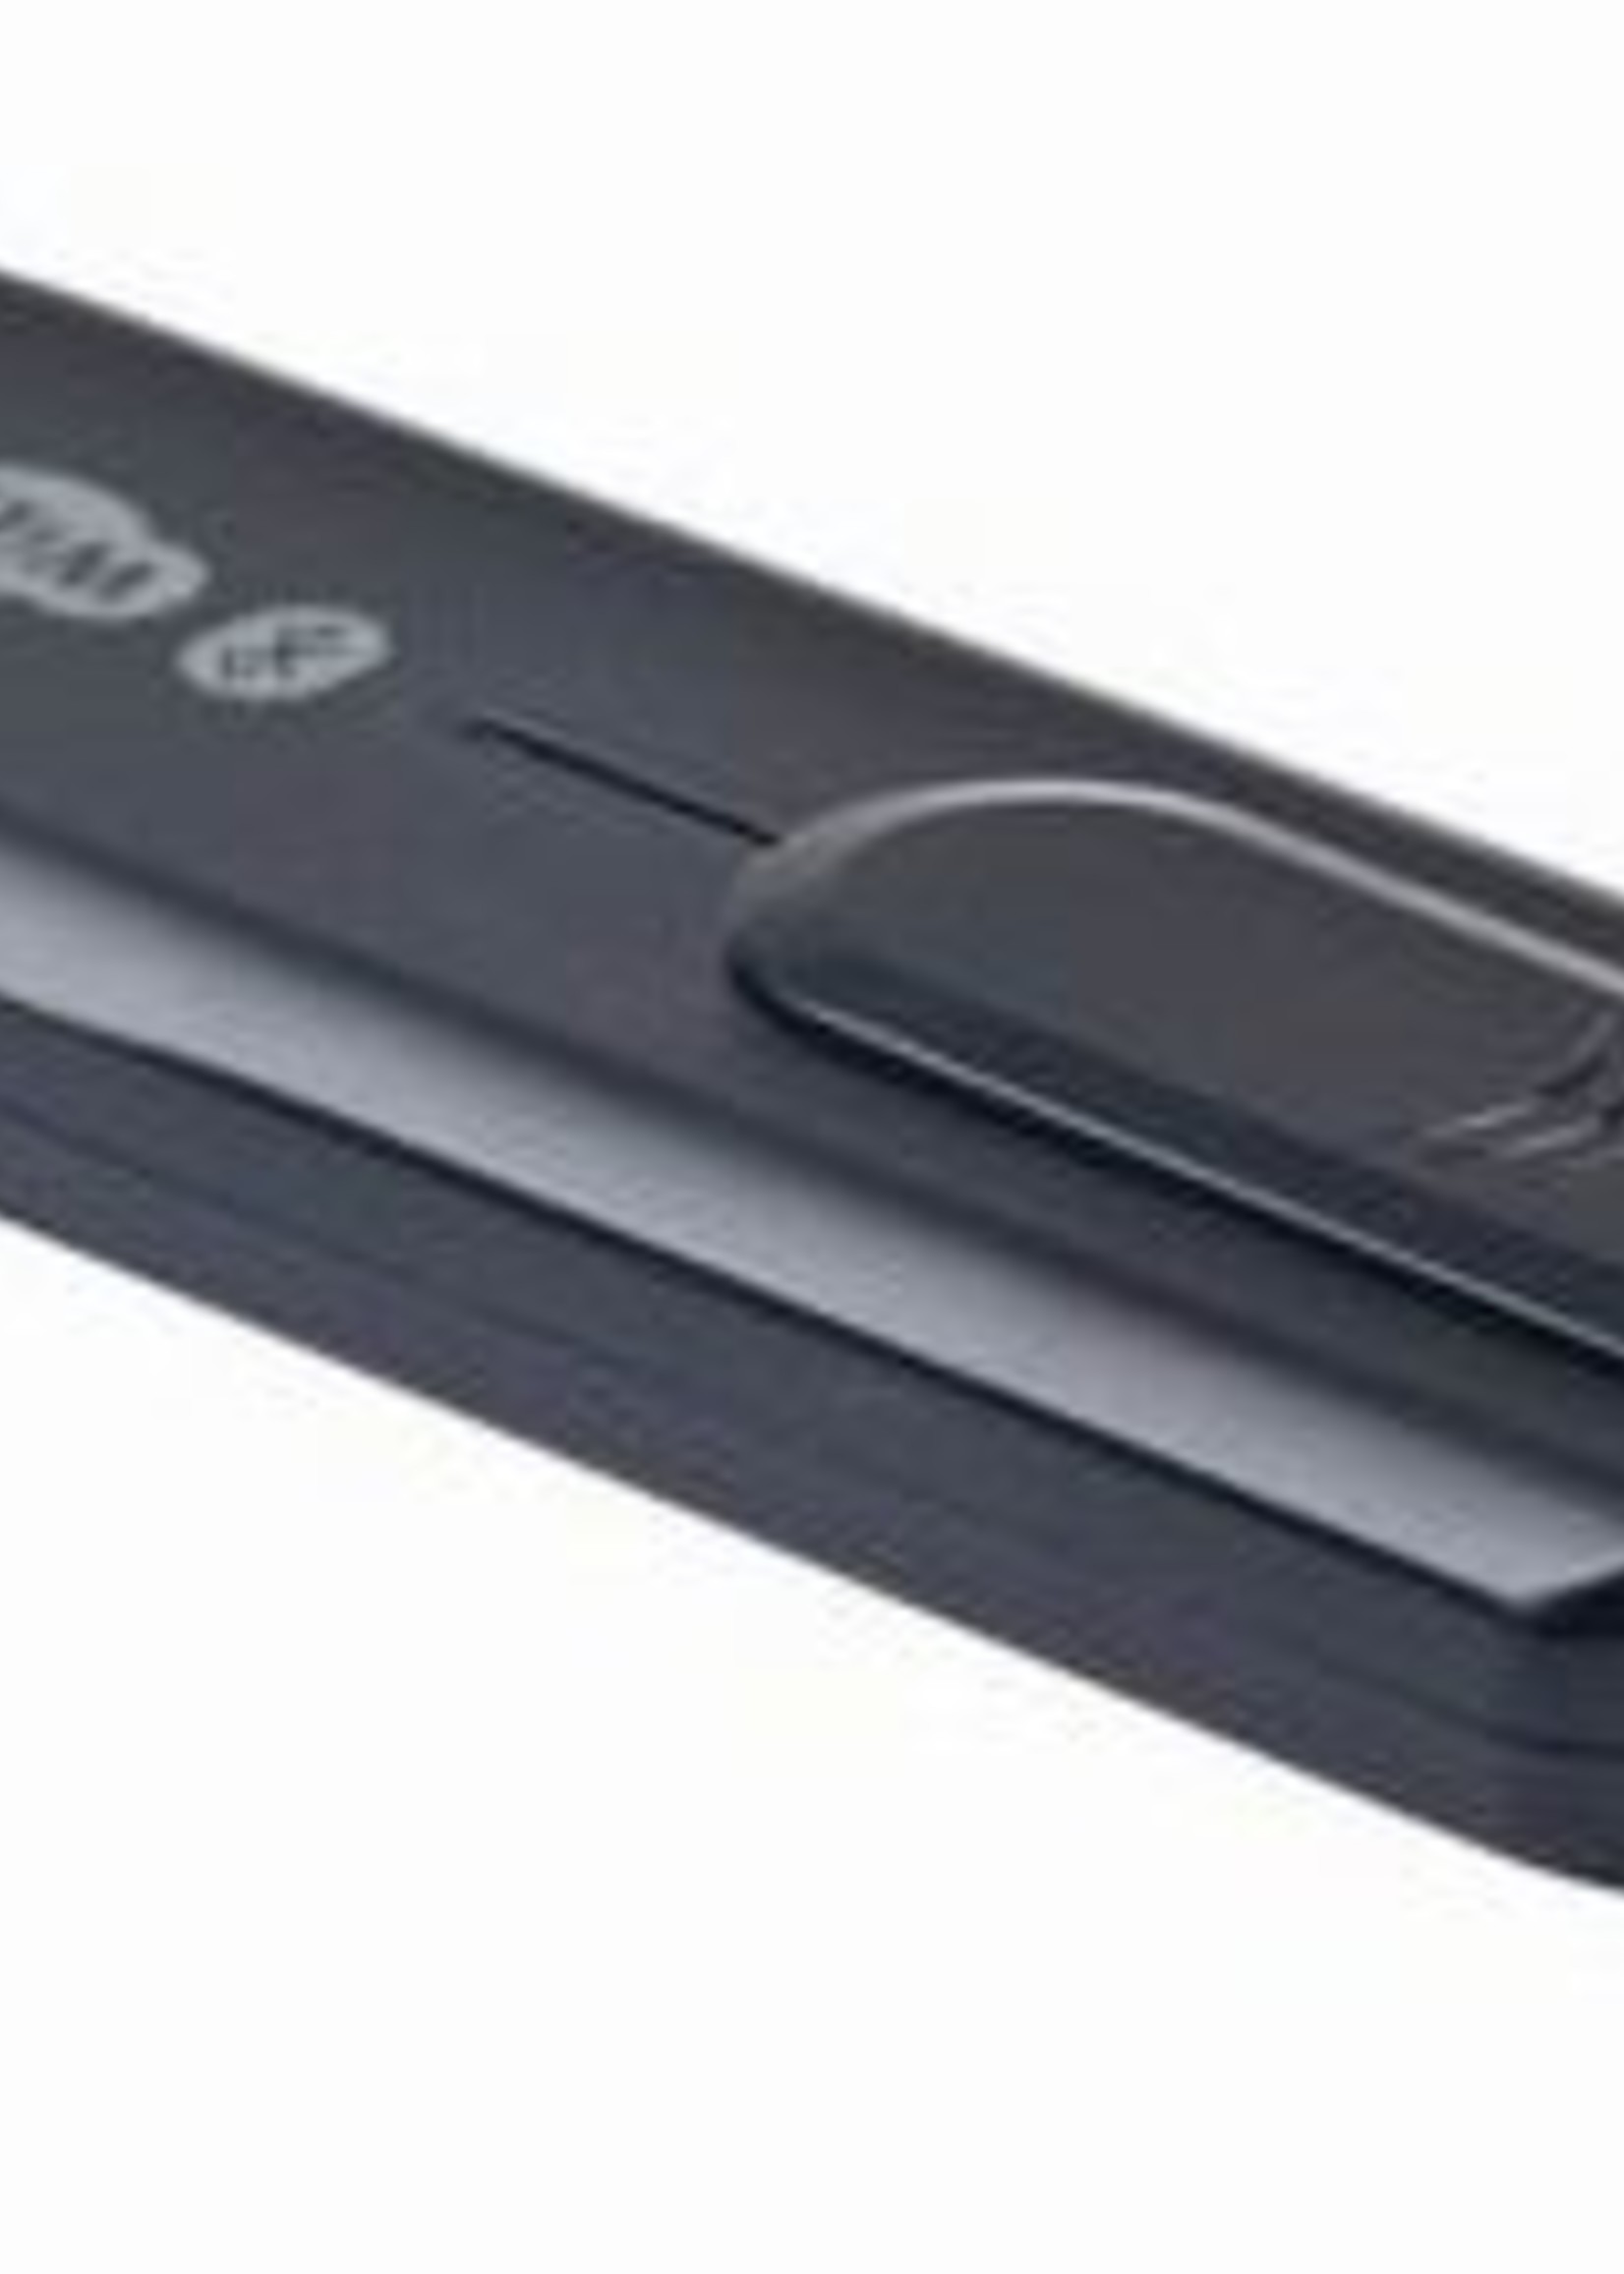 Gembird USB Bluetooth & WiFi netwerkadapter in 1